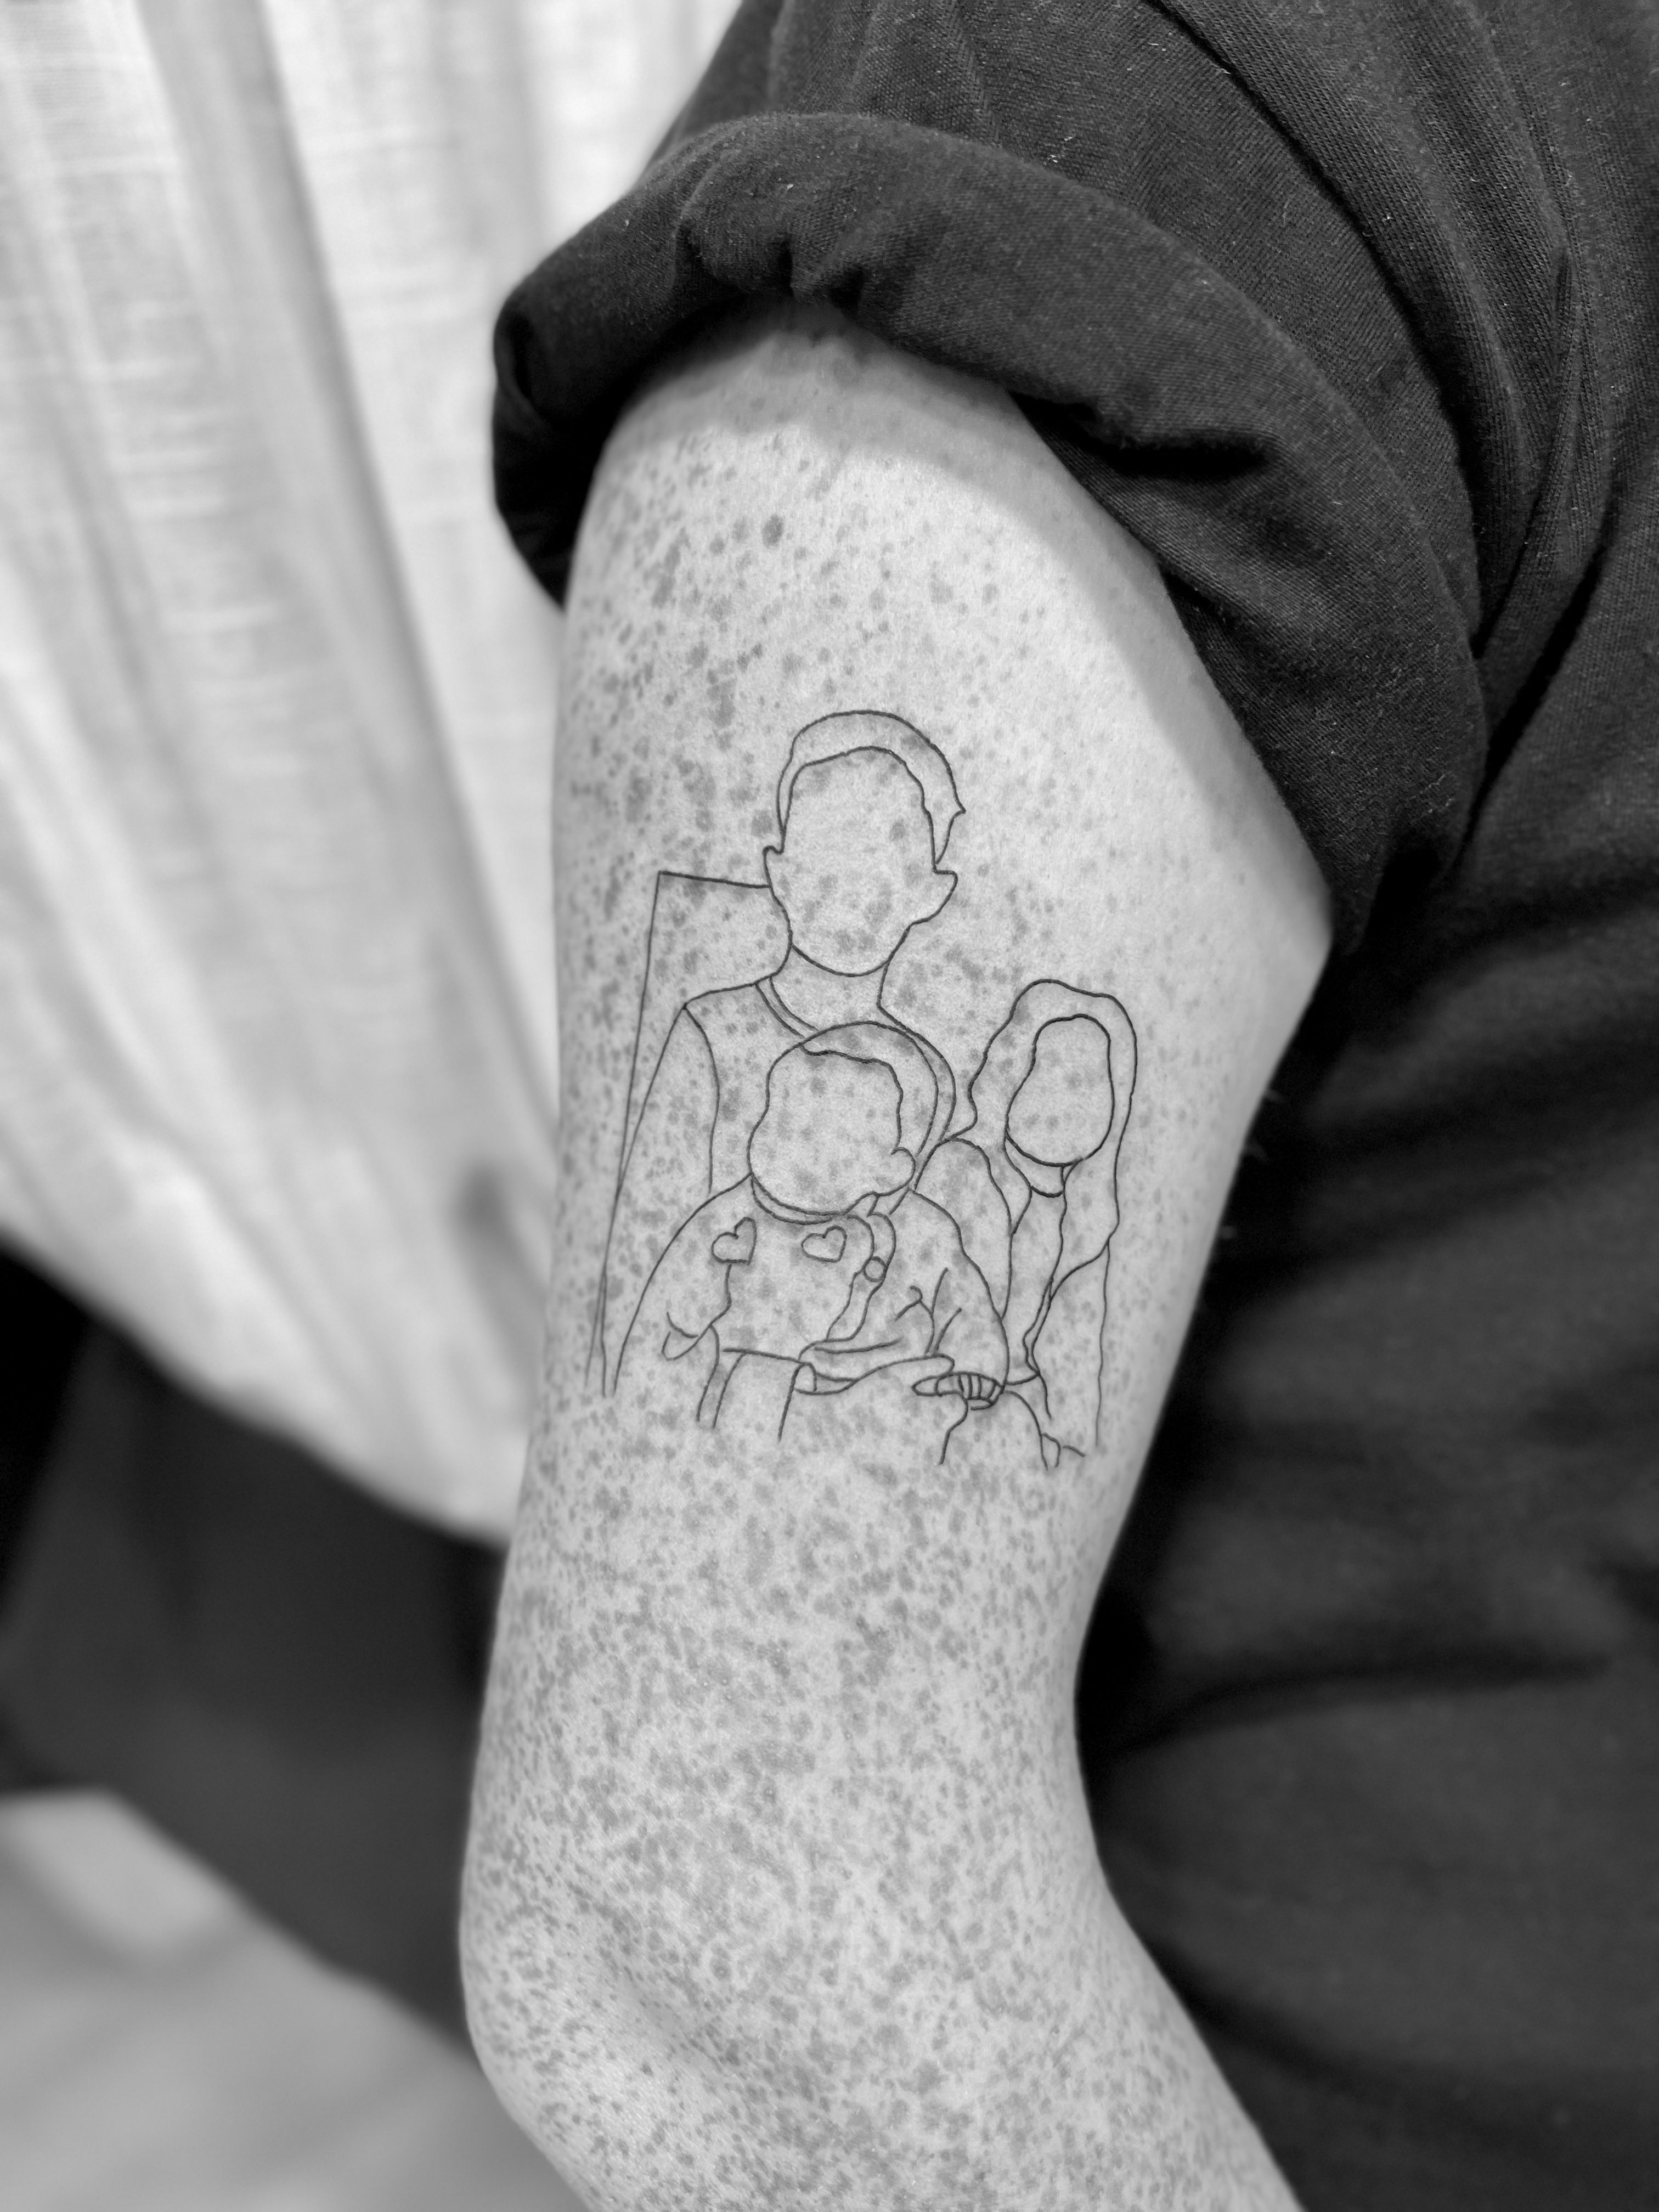 Line art Lana Del Rey portrait tattoo on the bicep.